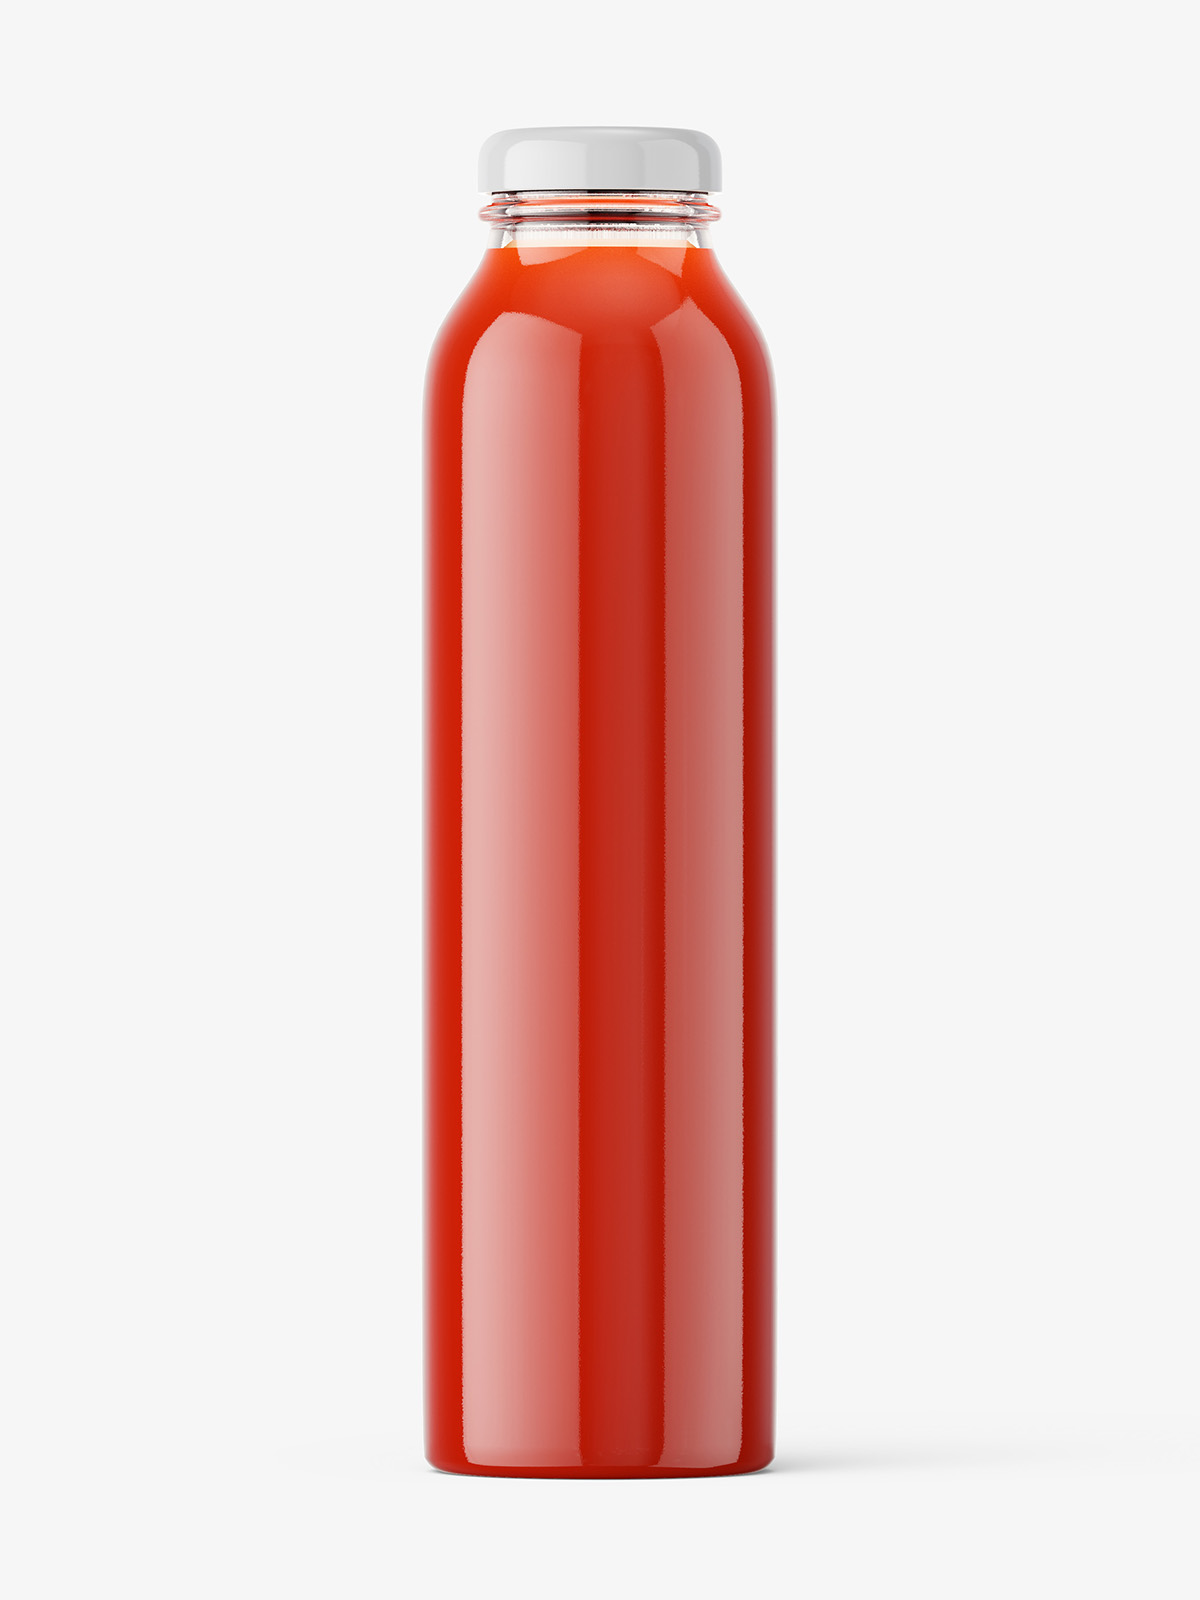 Download Tomato juice bottle mockup - Smarty Mockups